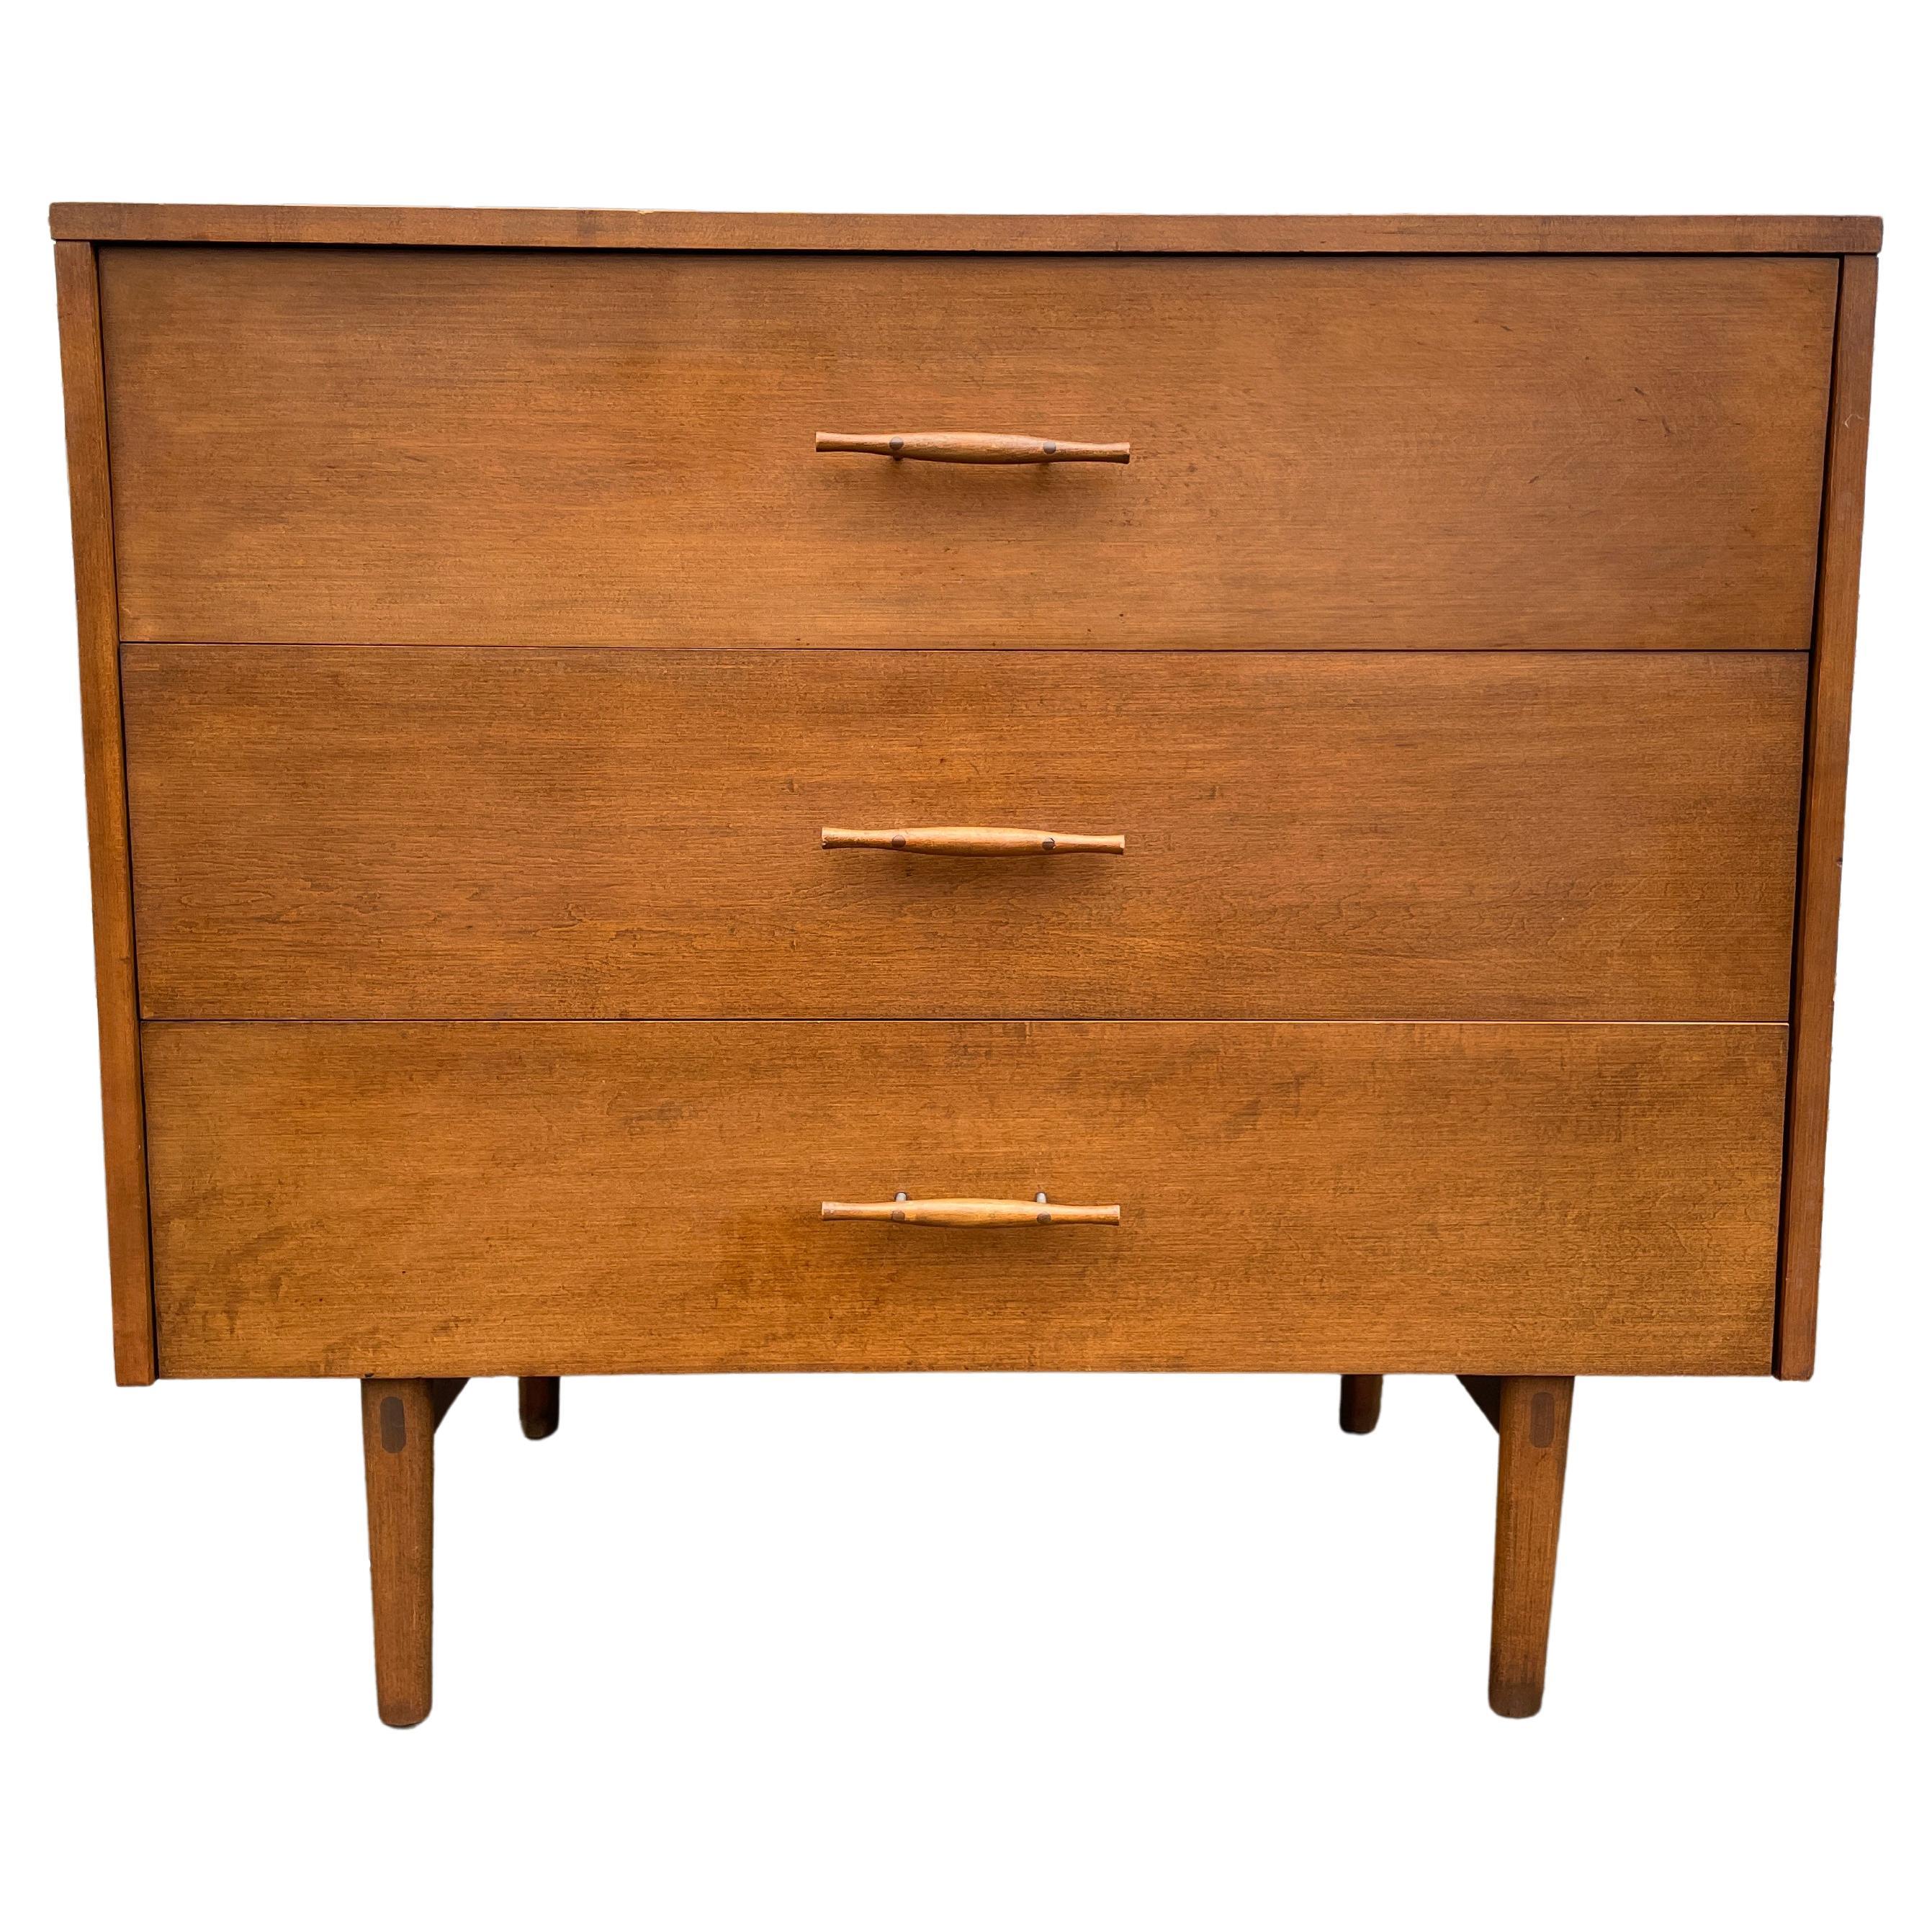 Midcentury Modern Paul McCobb 3-Drawer Dresser #1508 Walnut Finish Pull Handles For Sale